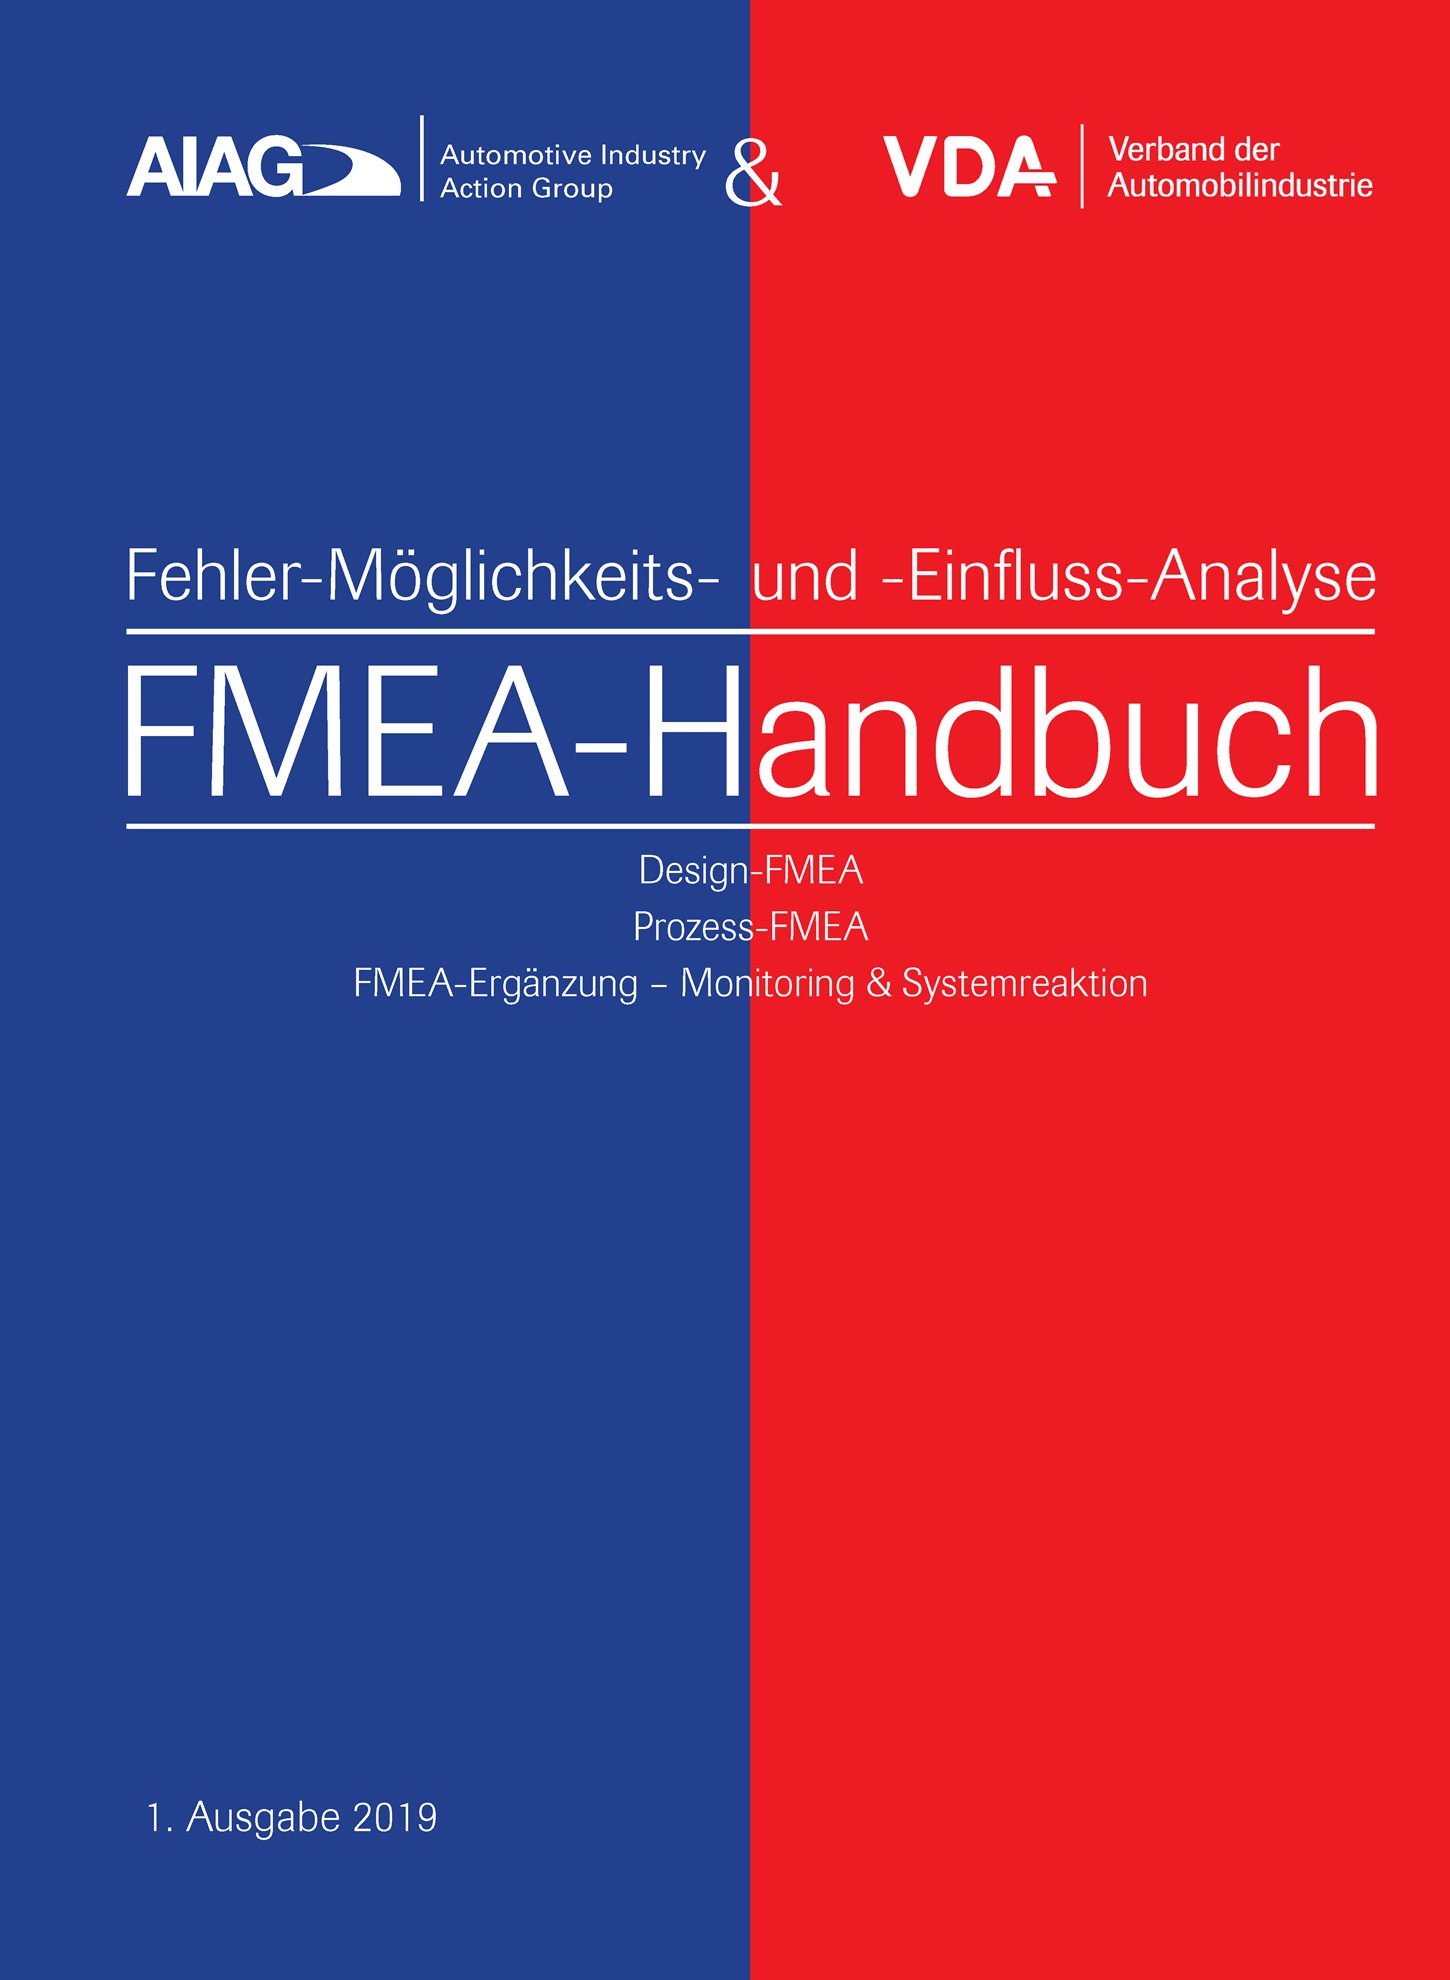 Publications  VDA AIAG & VDA FMEA-Handbuch
 Design-FMEA, Prozess-FMEA, 
 FMEA-Ergänzung - Monitoring & Systemreaktion
 1. Ausgabe 2019 1.1.2019 preview